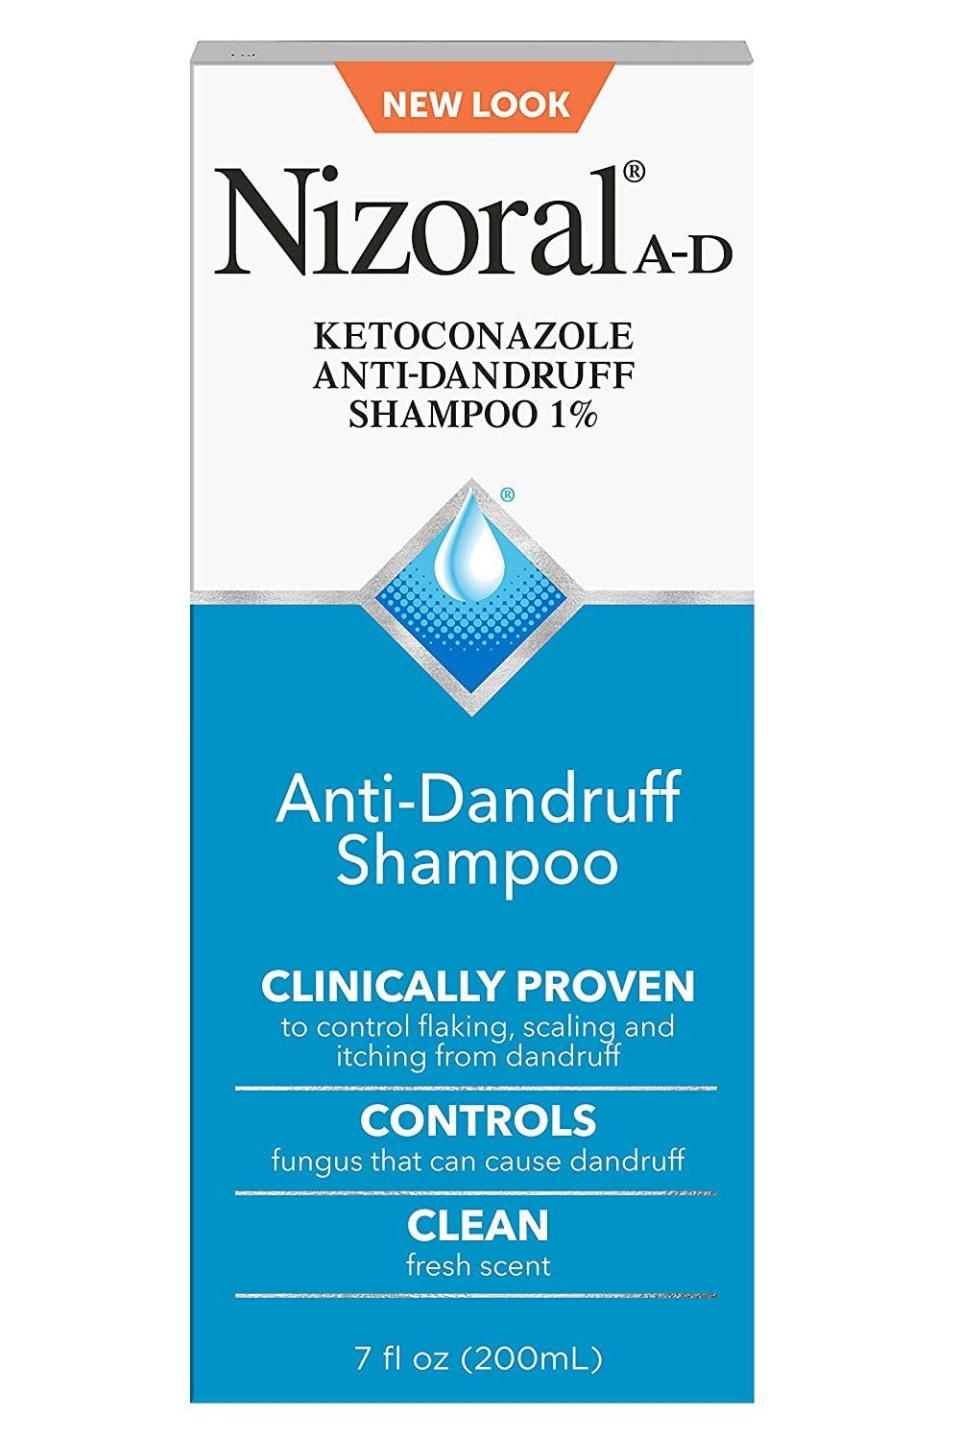 7) Nizoral Anti-Dandruff Shampoo